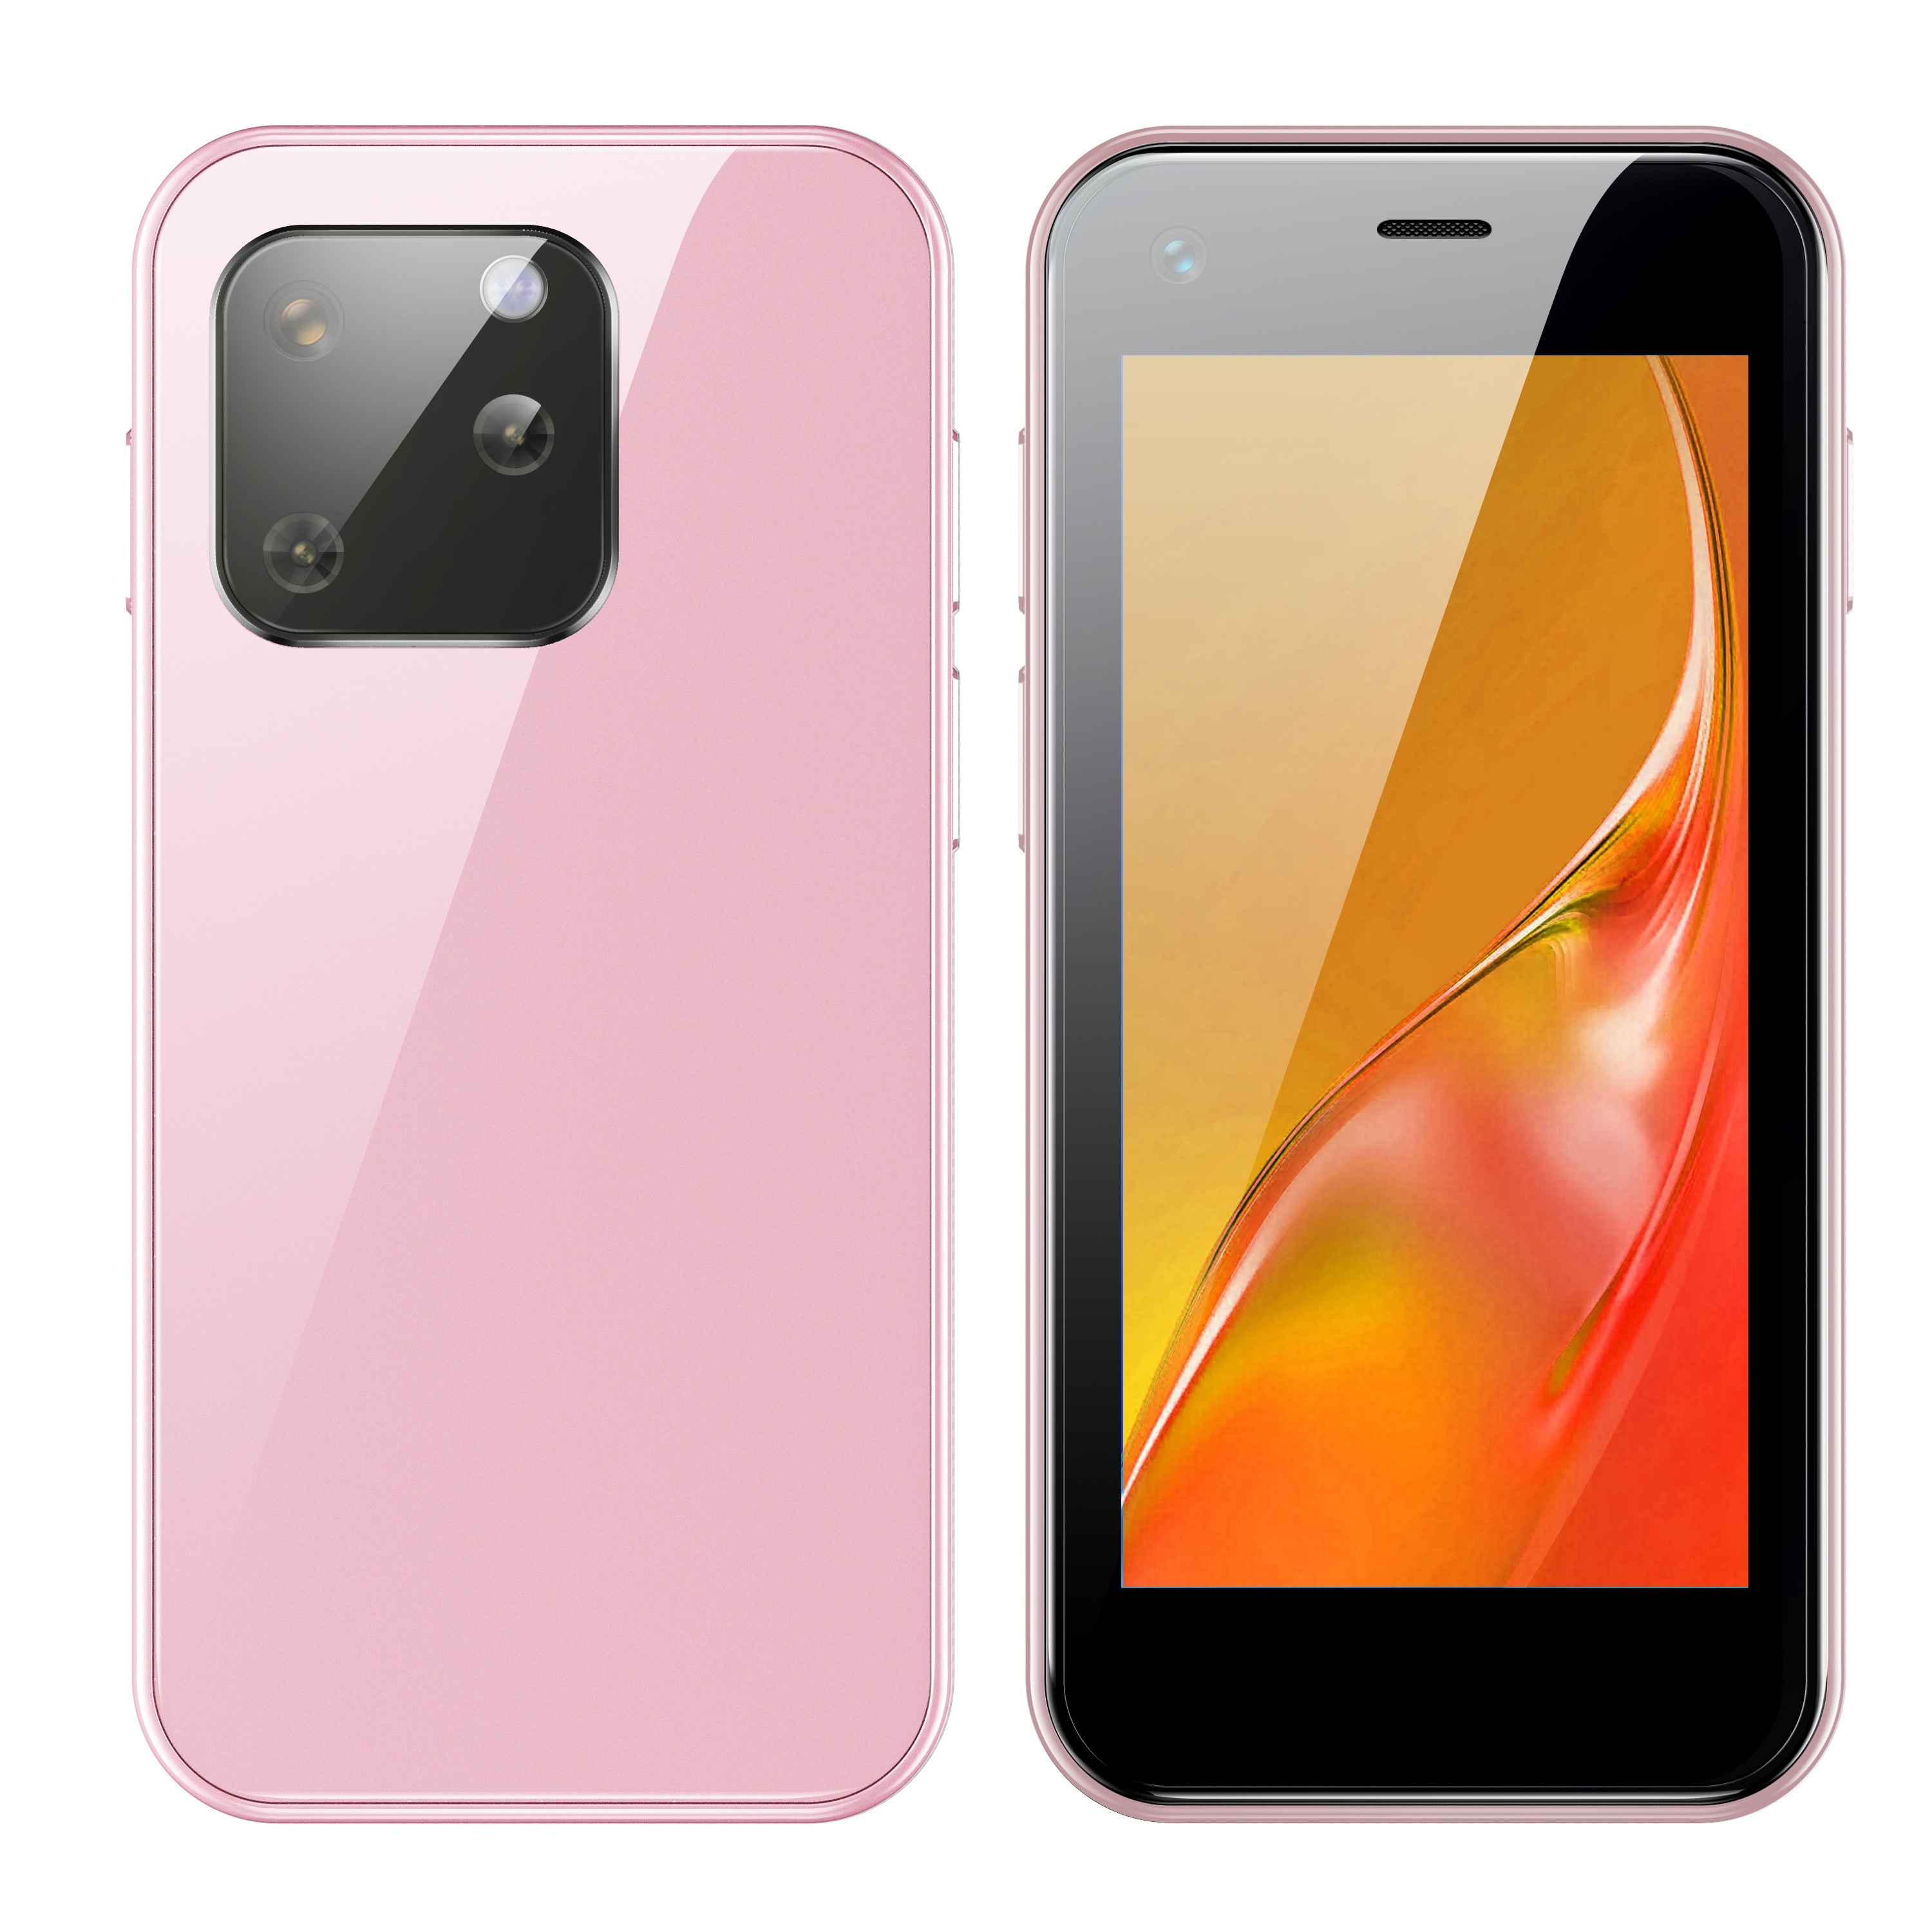 Smartphone Mini tamaño 2,5 pulgadas HD pantalla táctil teléfono celular  ligero para trabajar 1GB RAM 8GB ROM rosa